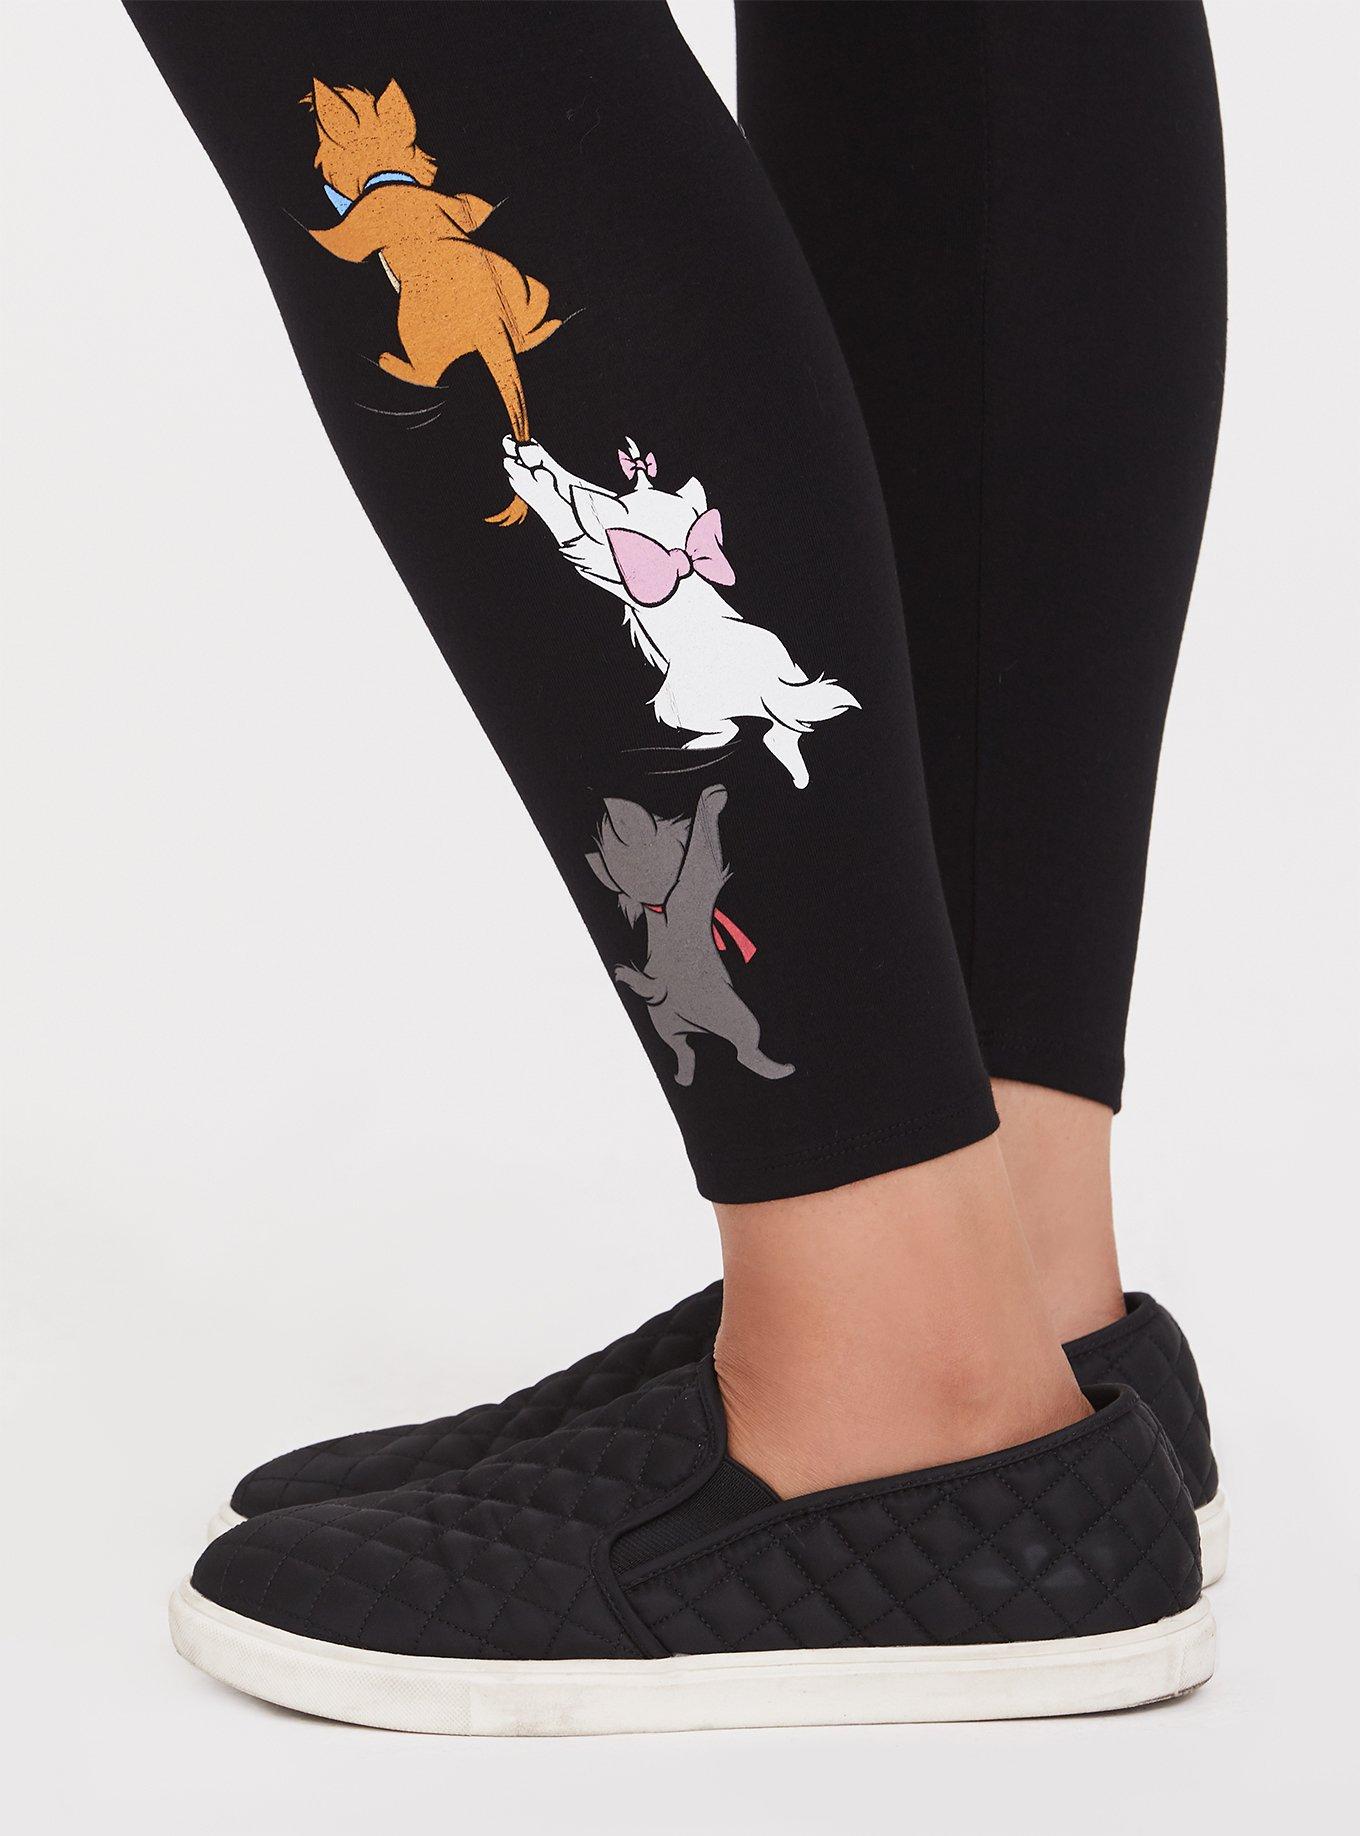 Plus Size - Disney The Aristocats Cat Character Crop Black Legging